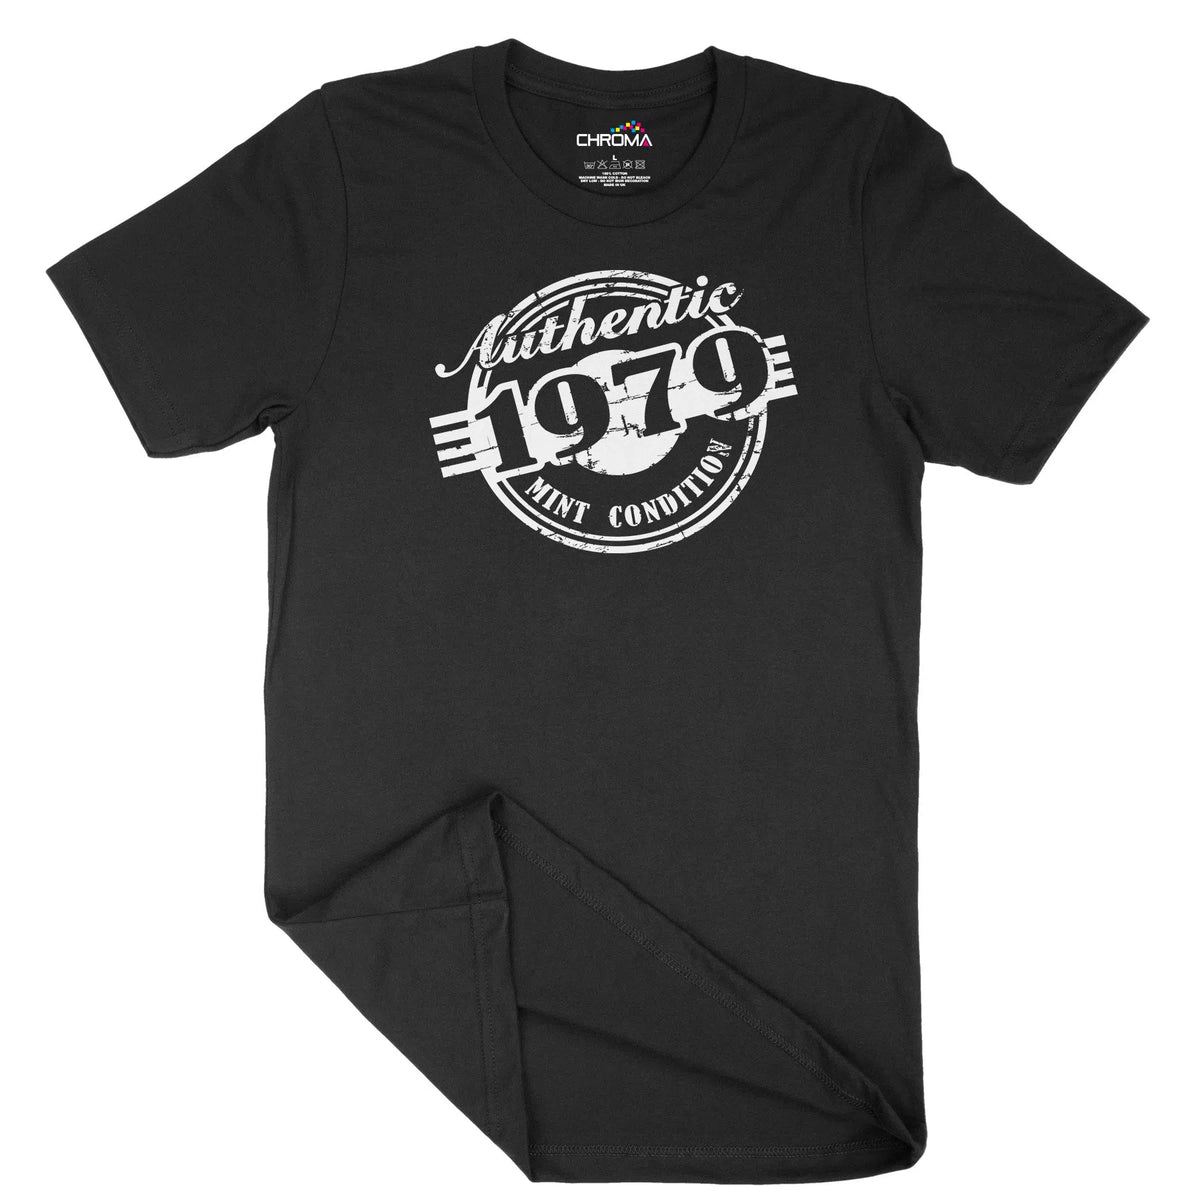 Authentic 1979 Mint Condition Unisex Adult T-Shirt | Quality Slogan Cl Chroma Clothing